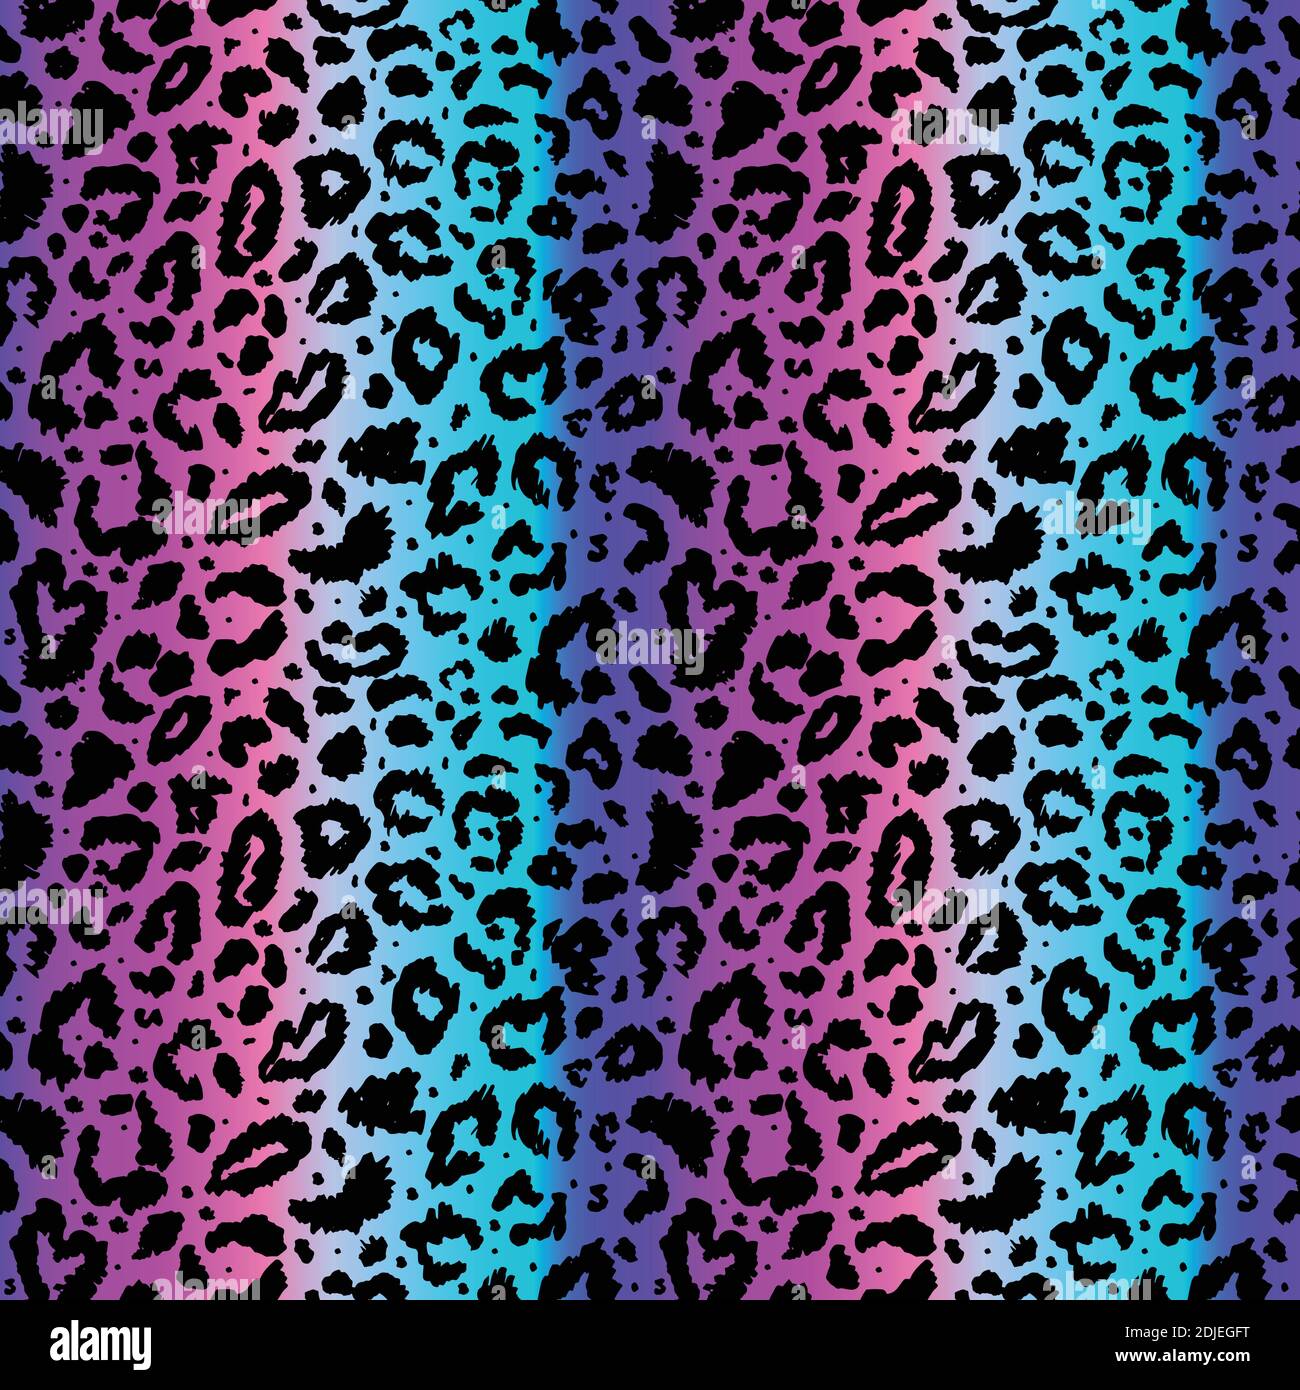 Leopard Pattern, Leopard Print, Animal print, image illustration